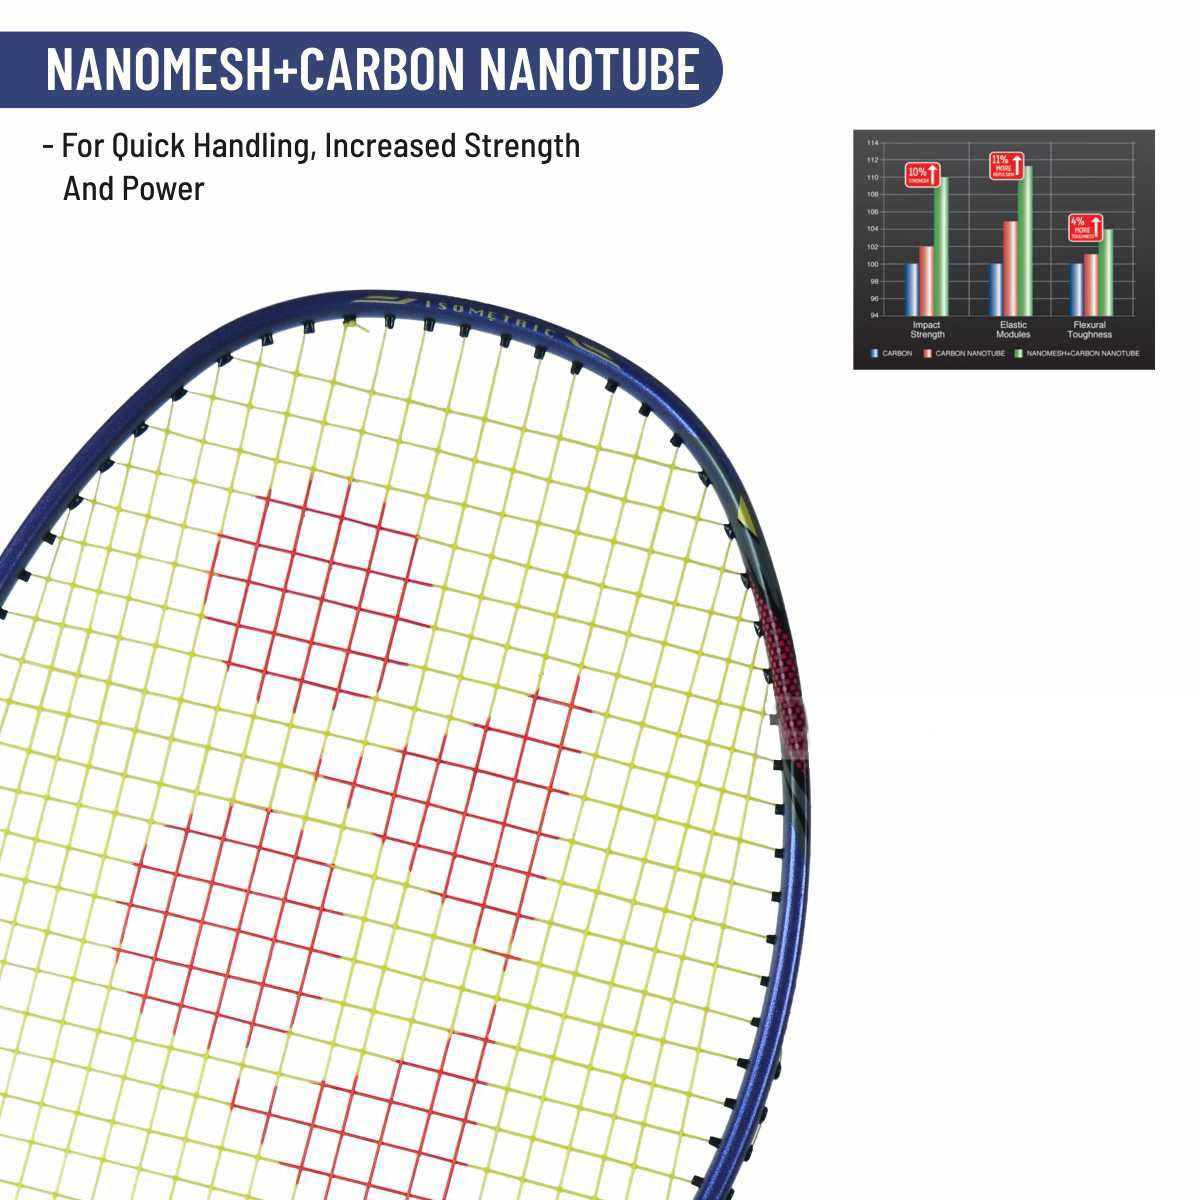 Yonex Nanoray 70 Light Badminton Racquet, Purple - Best Price online Prokicksports.com